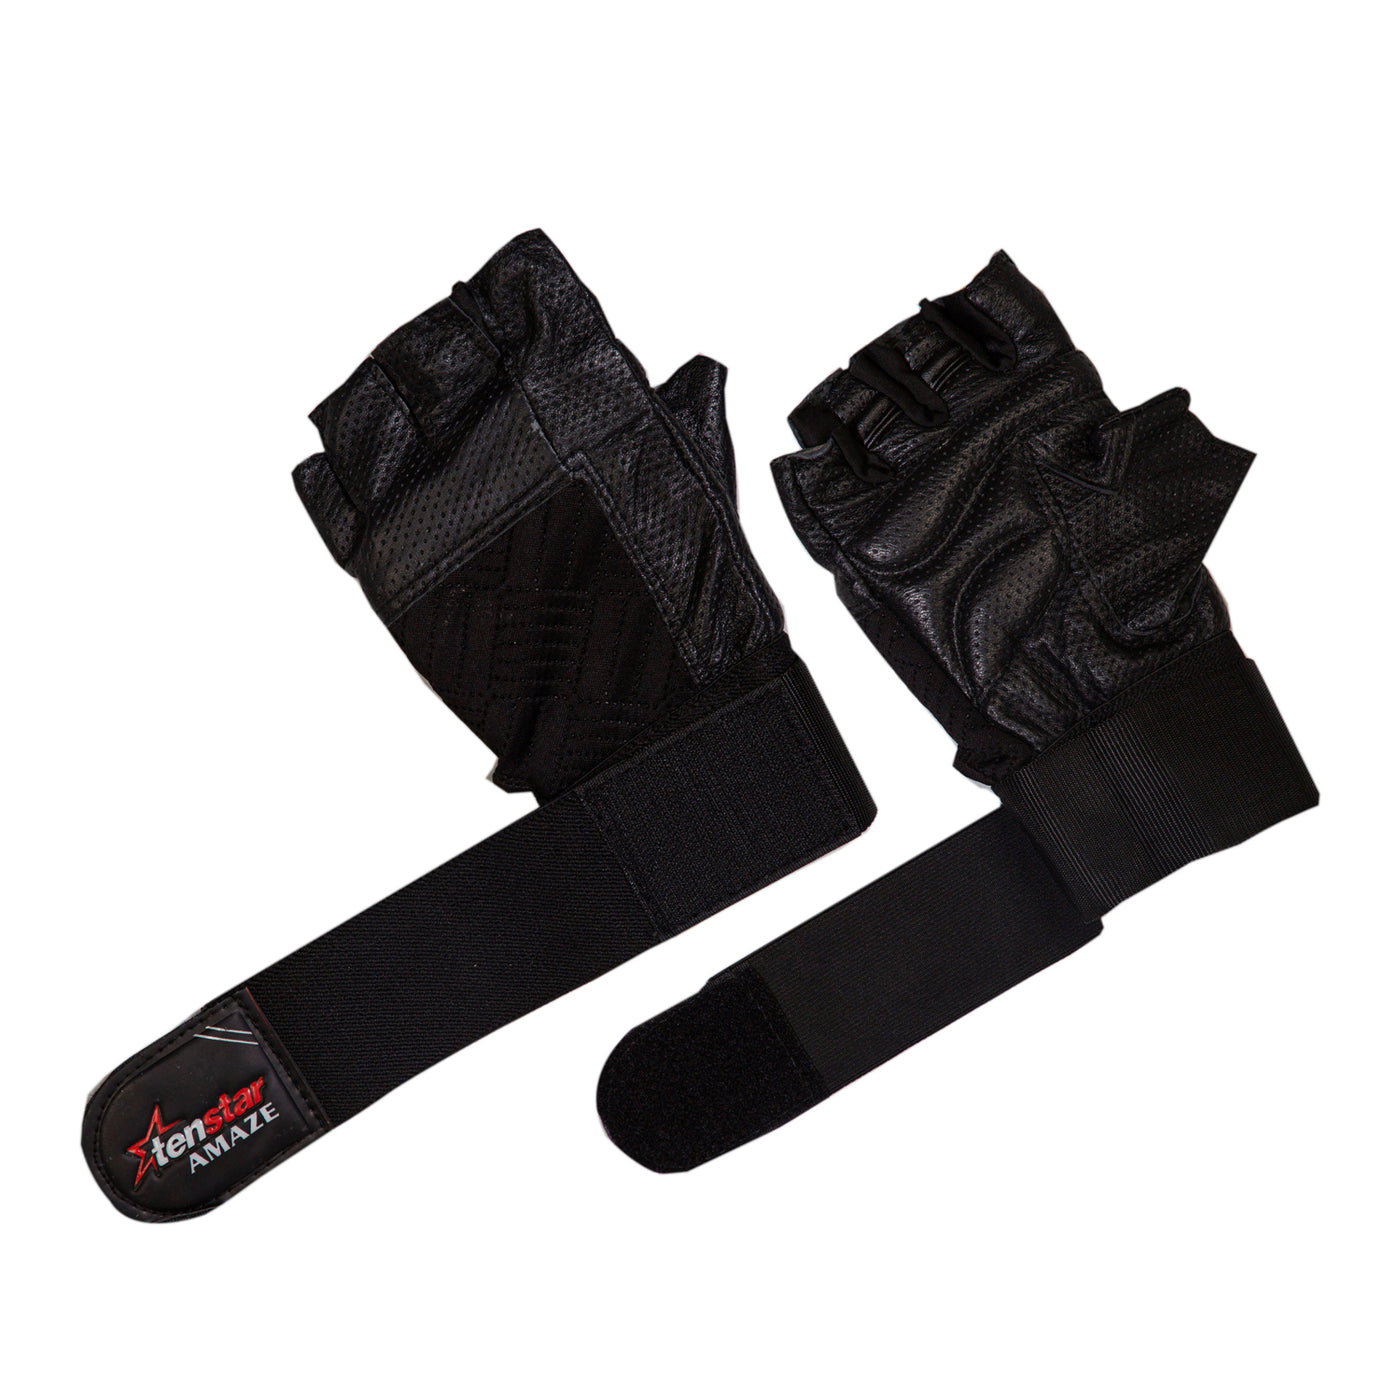 Tenstar Tenstar Amaze  Half Finger Gym Gloves - Black freeshipping - athletive Gym Gloves - Men athletive